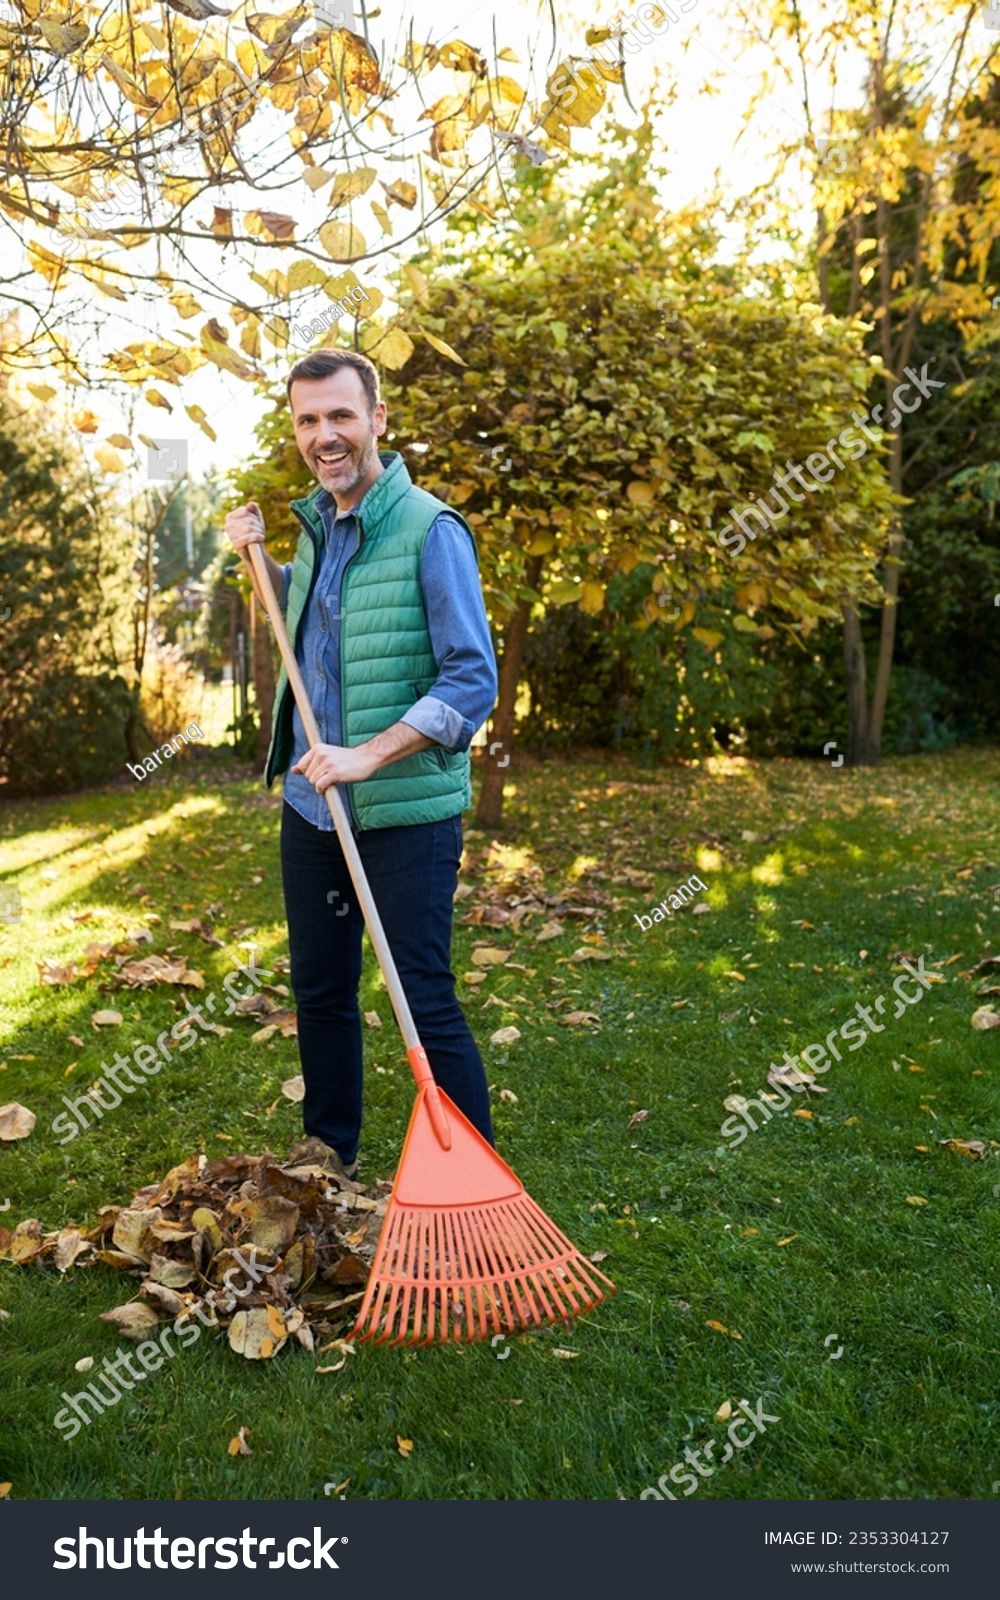 Man raking leaves in garden smiling at camera during fall autumn backyard cleanup #2353304127